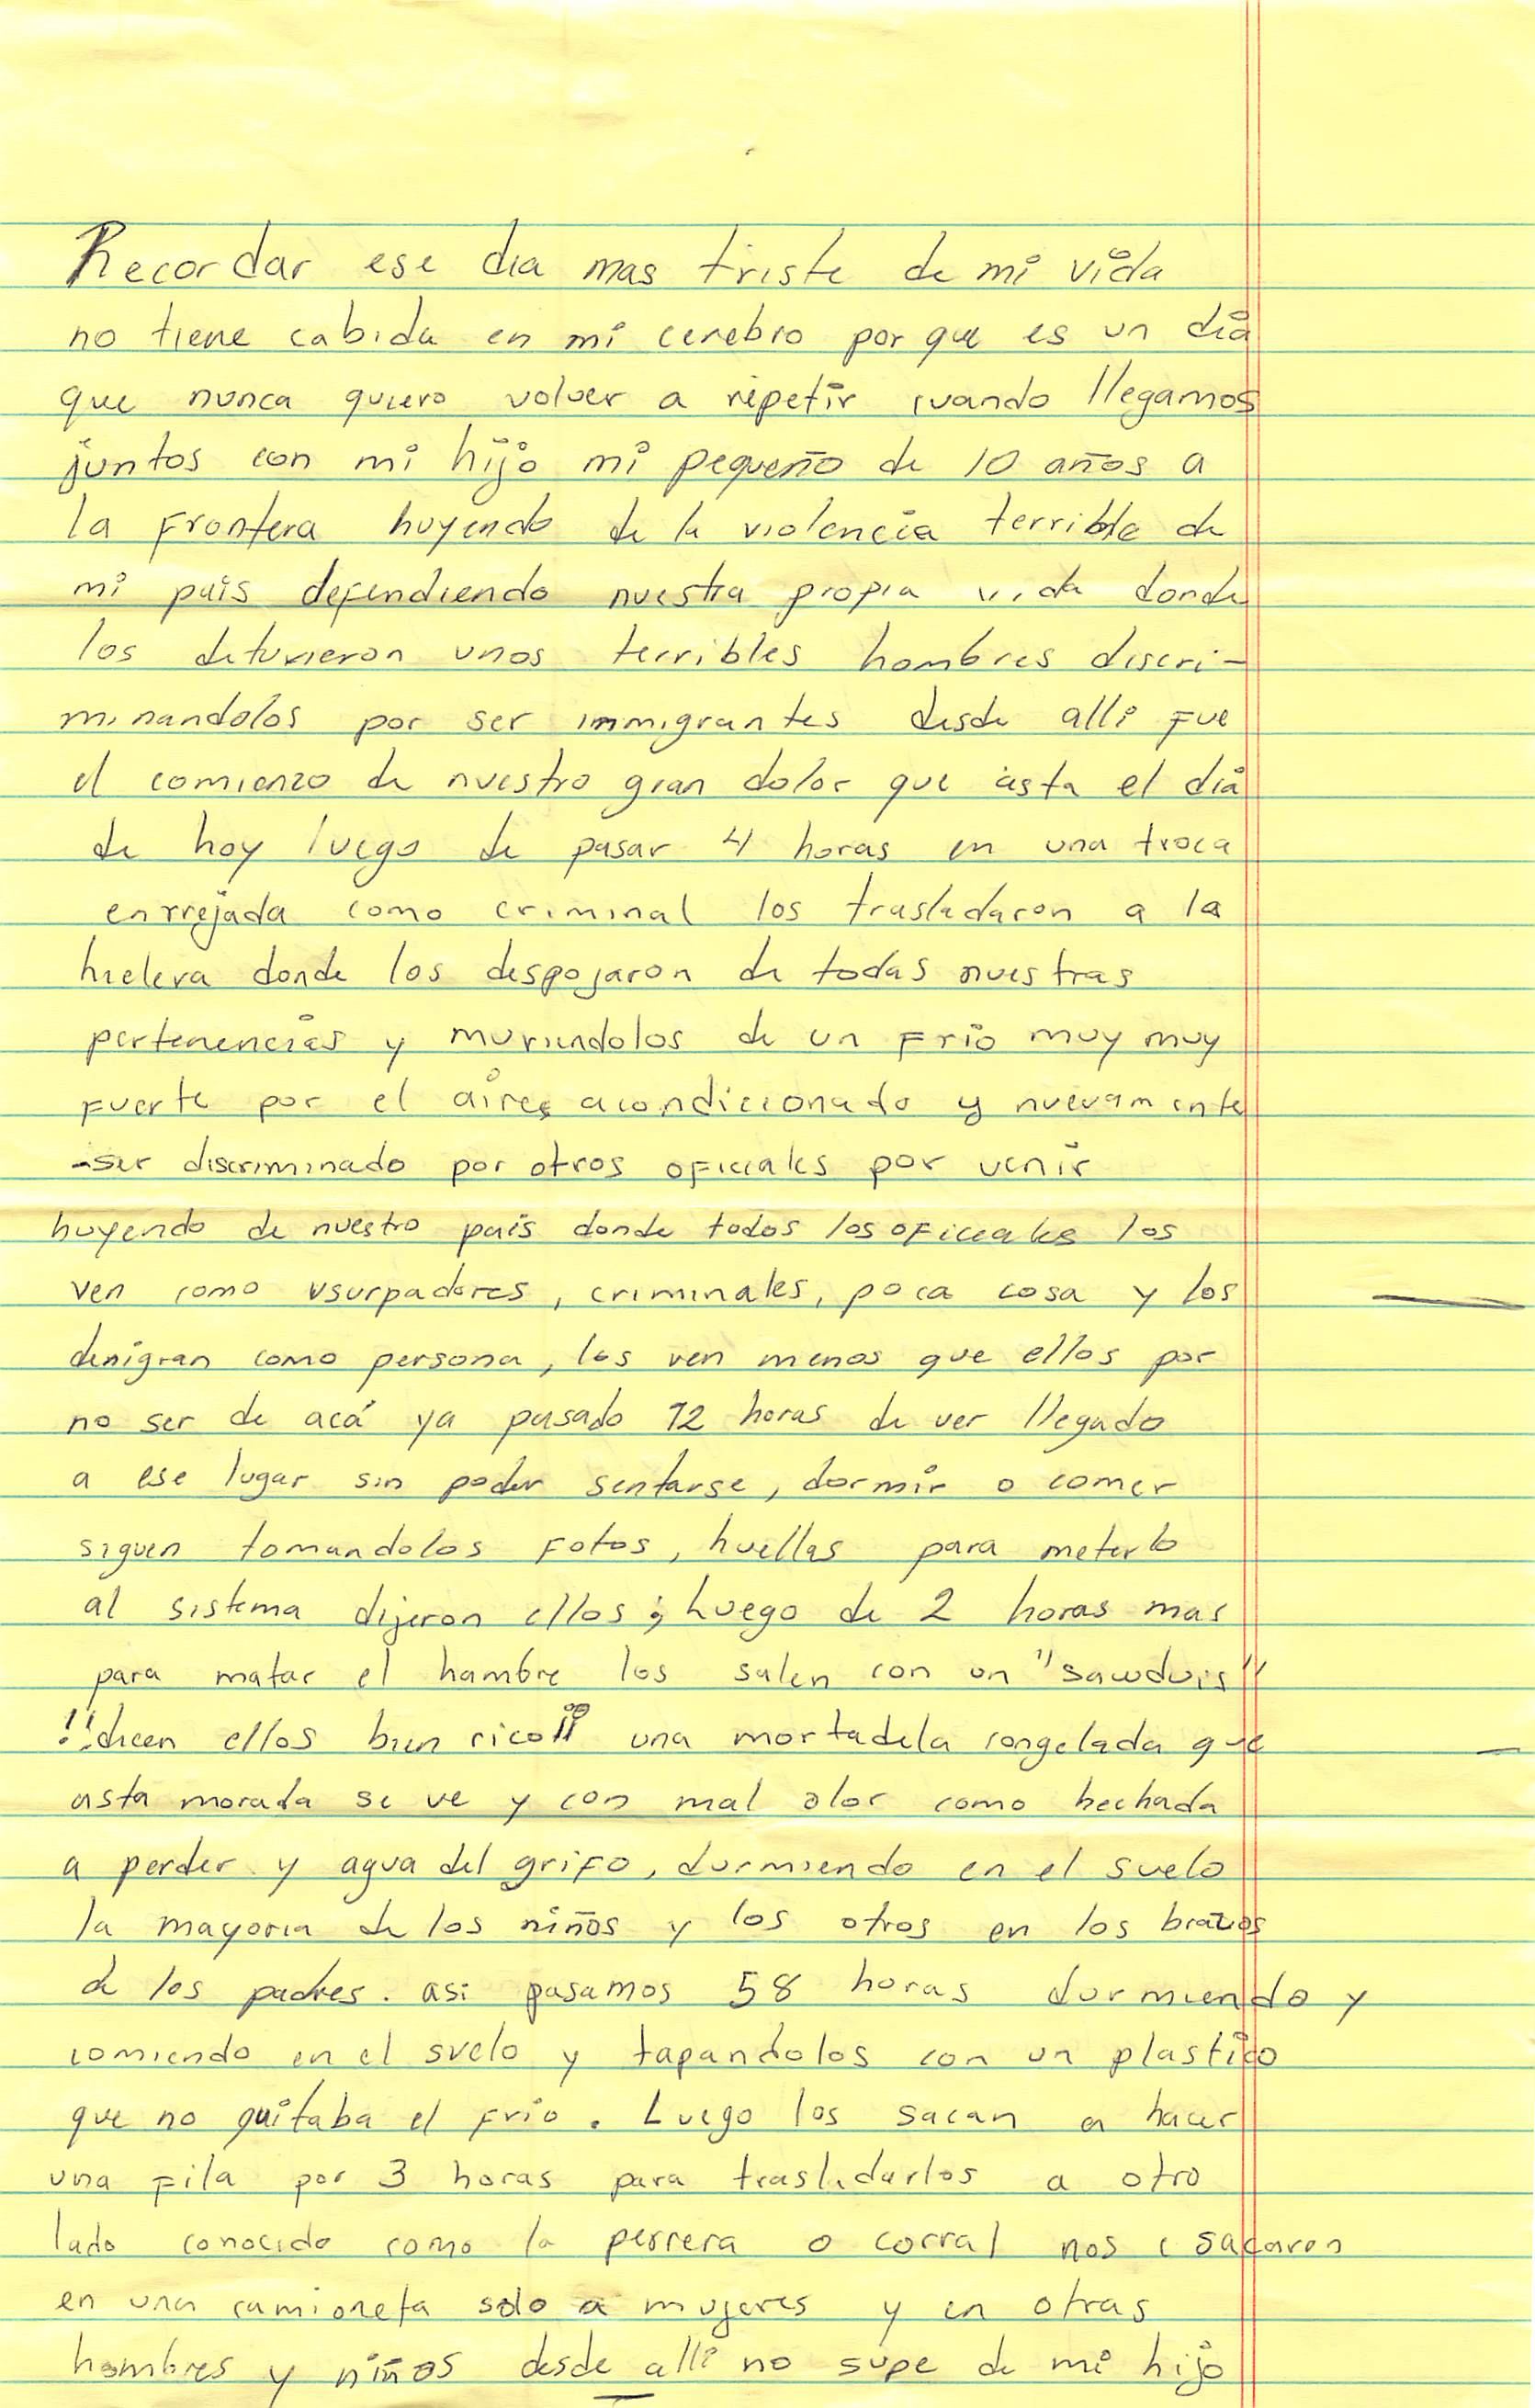 Luna's Handwritten Letter Part 1